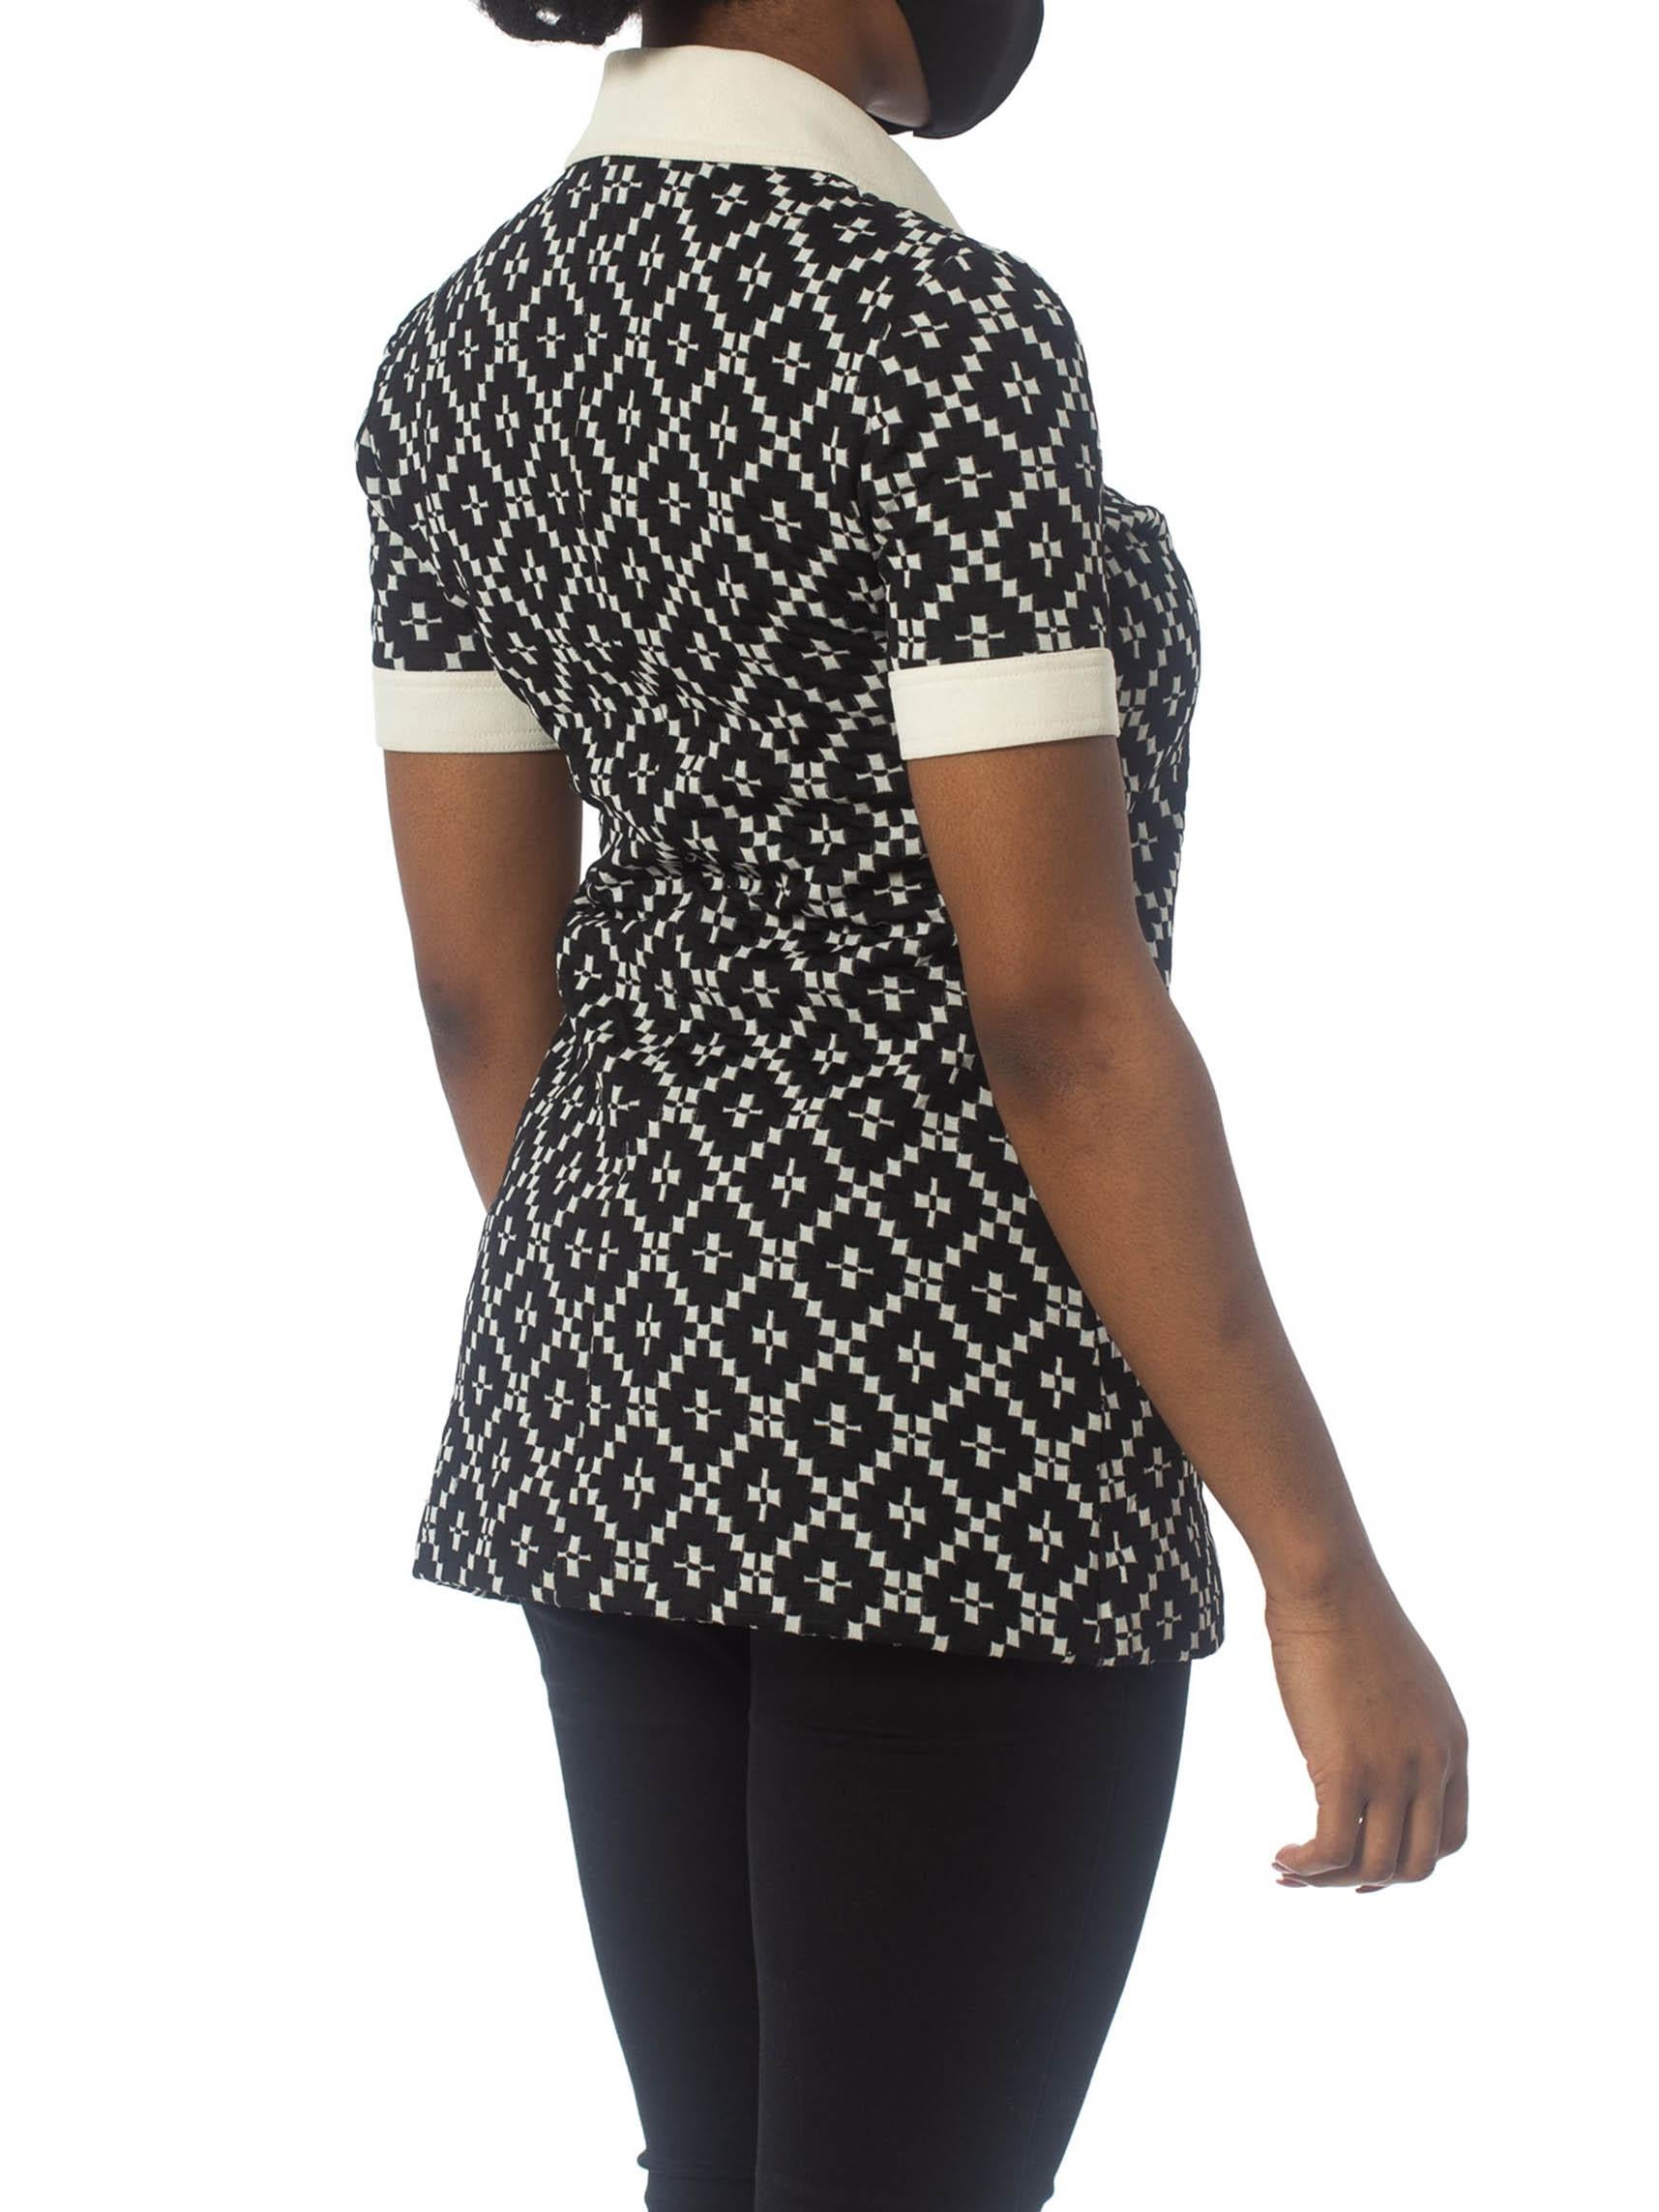 Schwarz-weißes Polyester-Jaquard-Strick-Op-Art Micro Mini-Dress-Tunika-Oberteil aus den 1960er Jahren 1